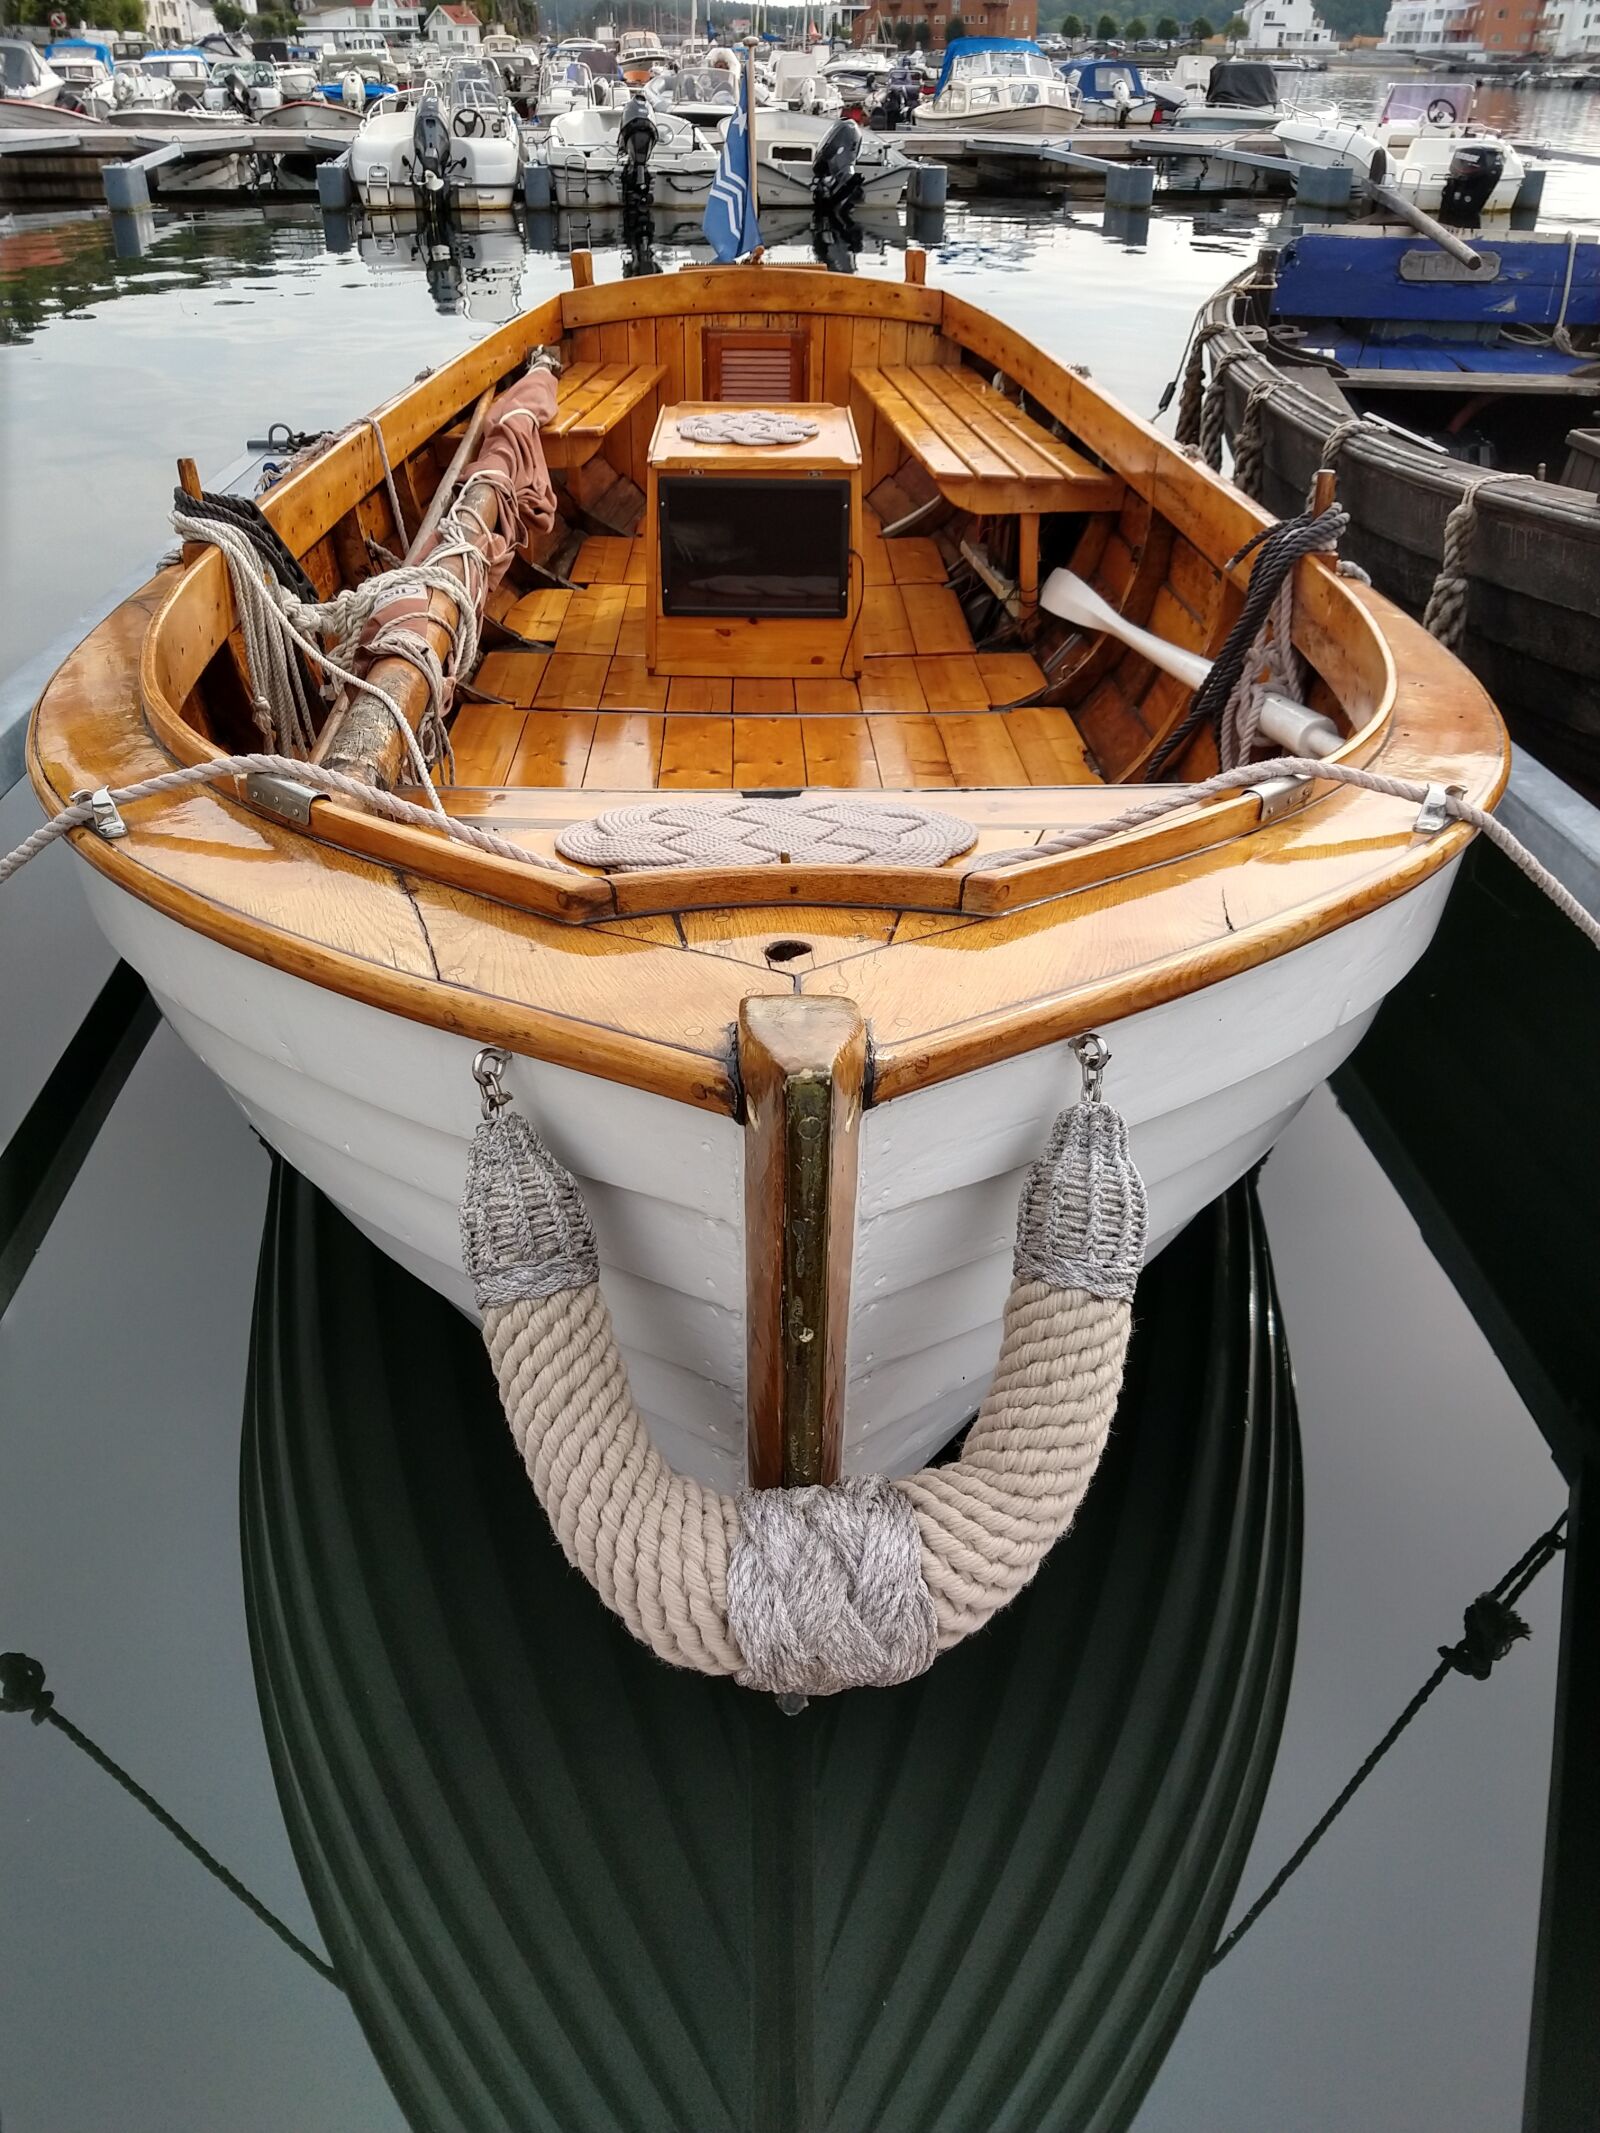 Motorola moto g(6) plus sample photo. Boat, wooden, water photography